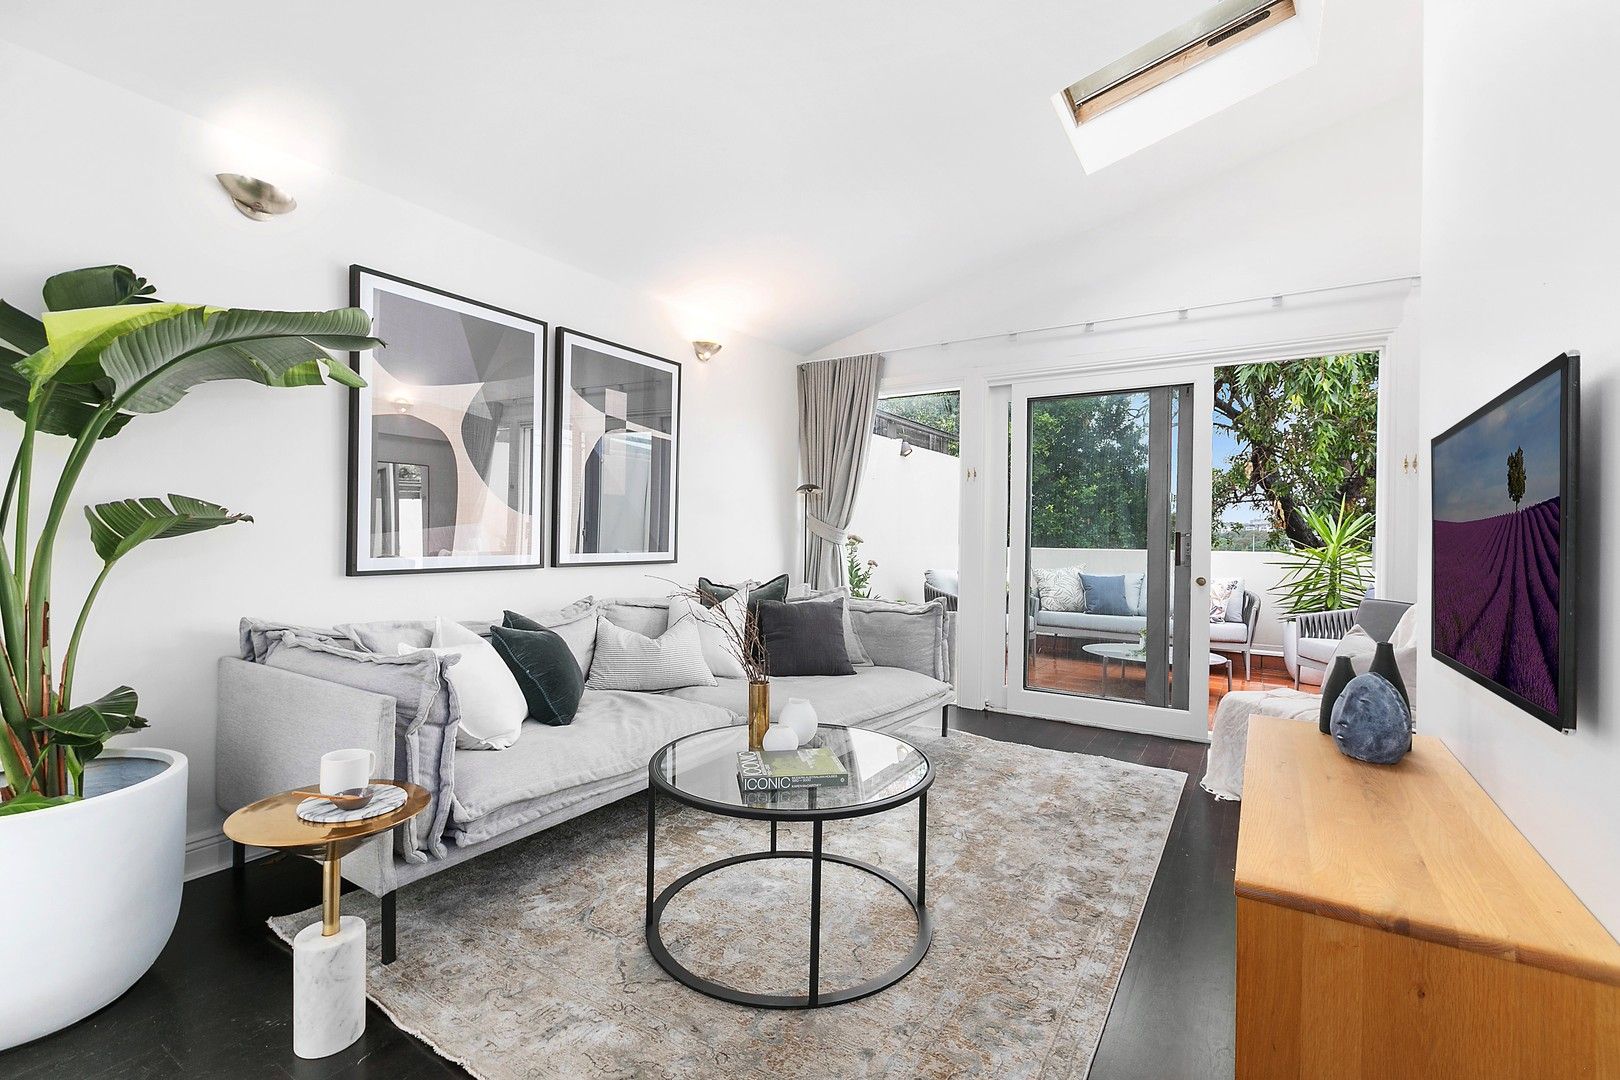 3 bedrooms House in 30 Lilyfield Road ROZELLE NSW, 2039